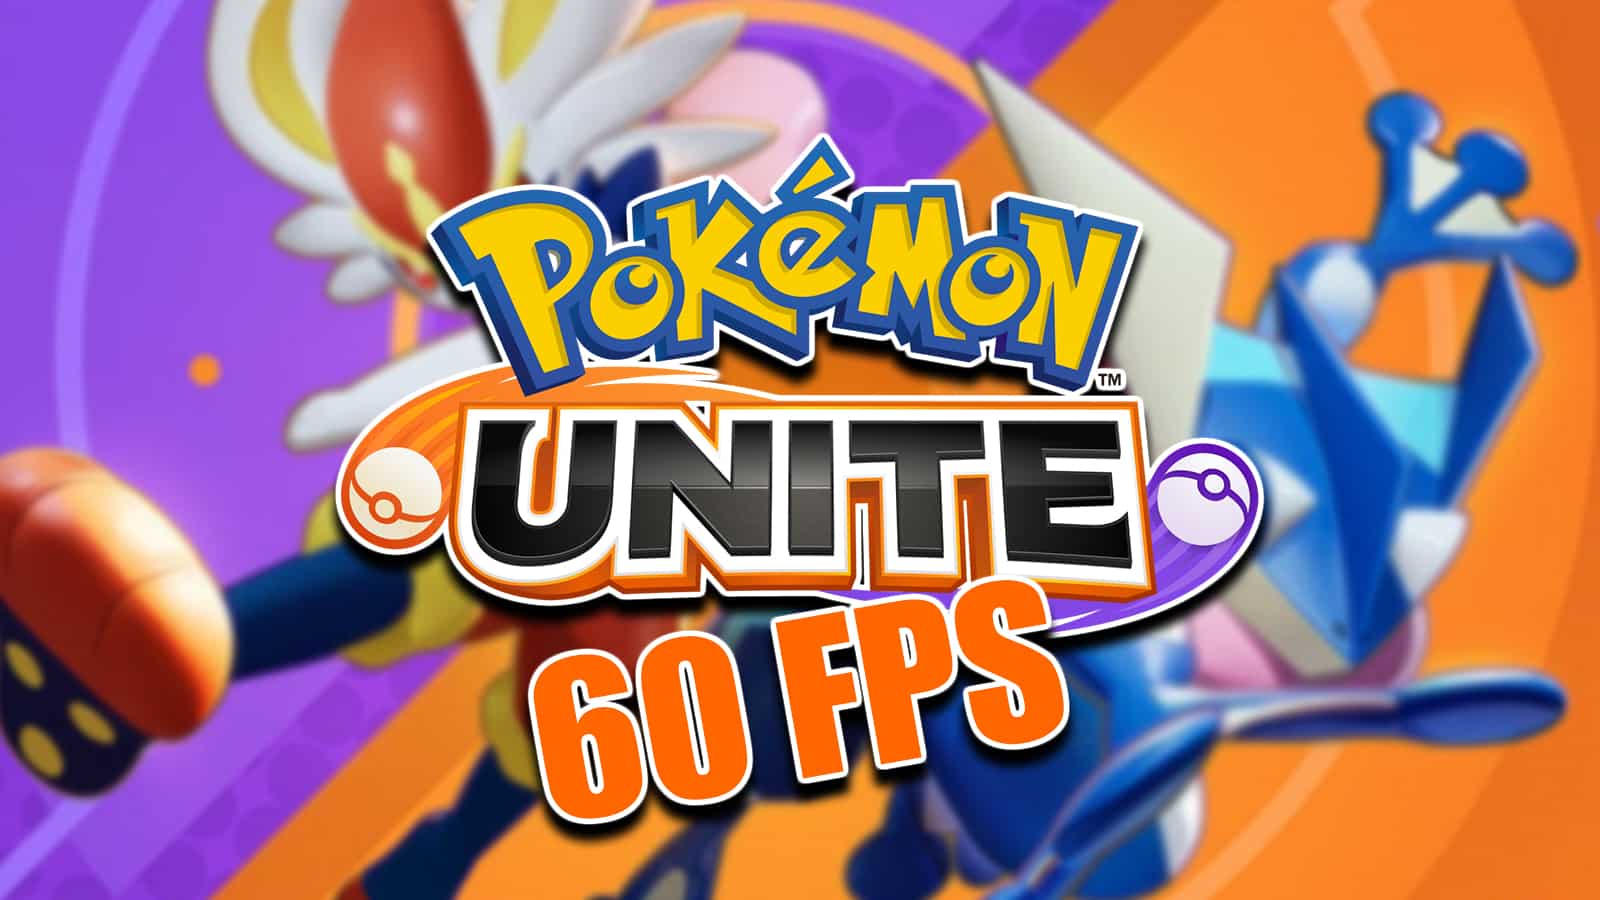 Pokemon Unite 60 FPS screen